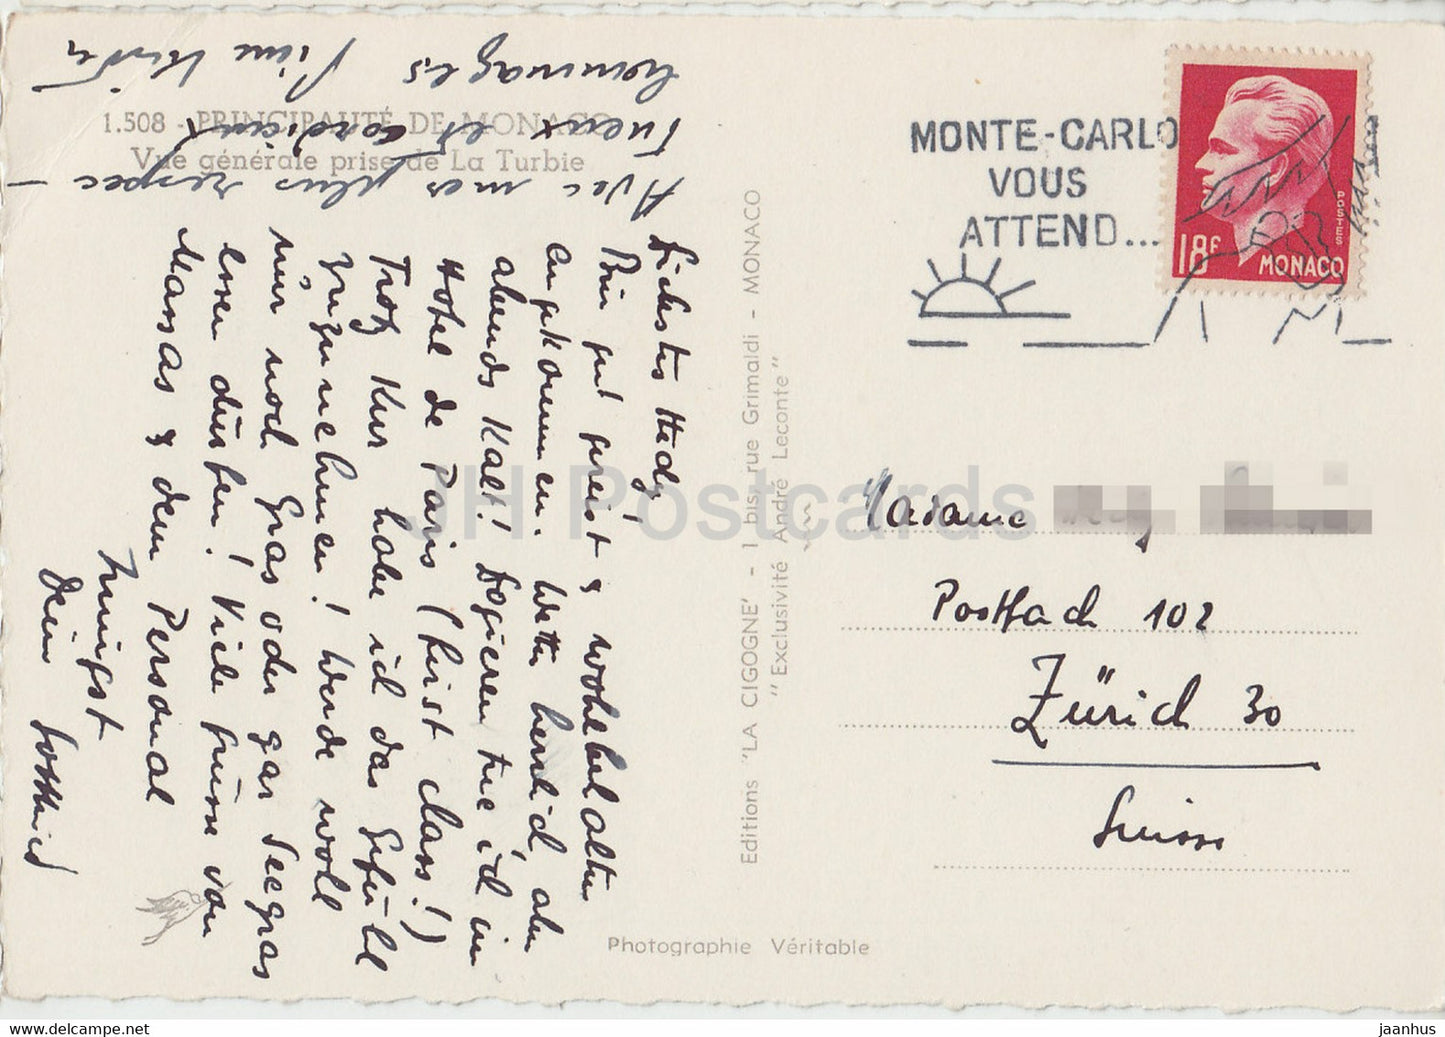 Vue Generale prise de La Turbie - old postcard - Monaco - used